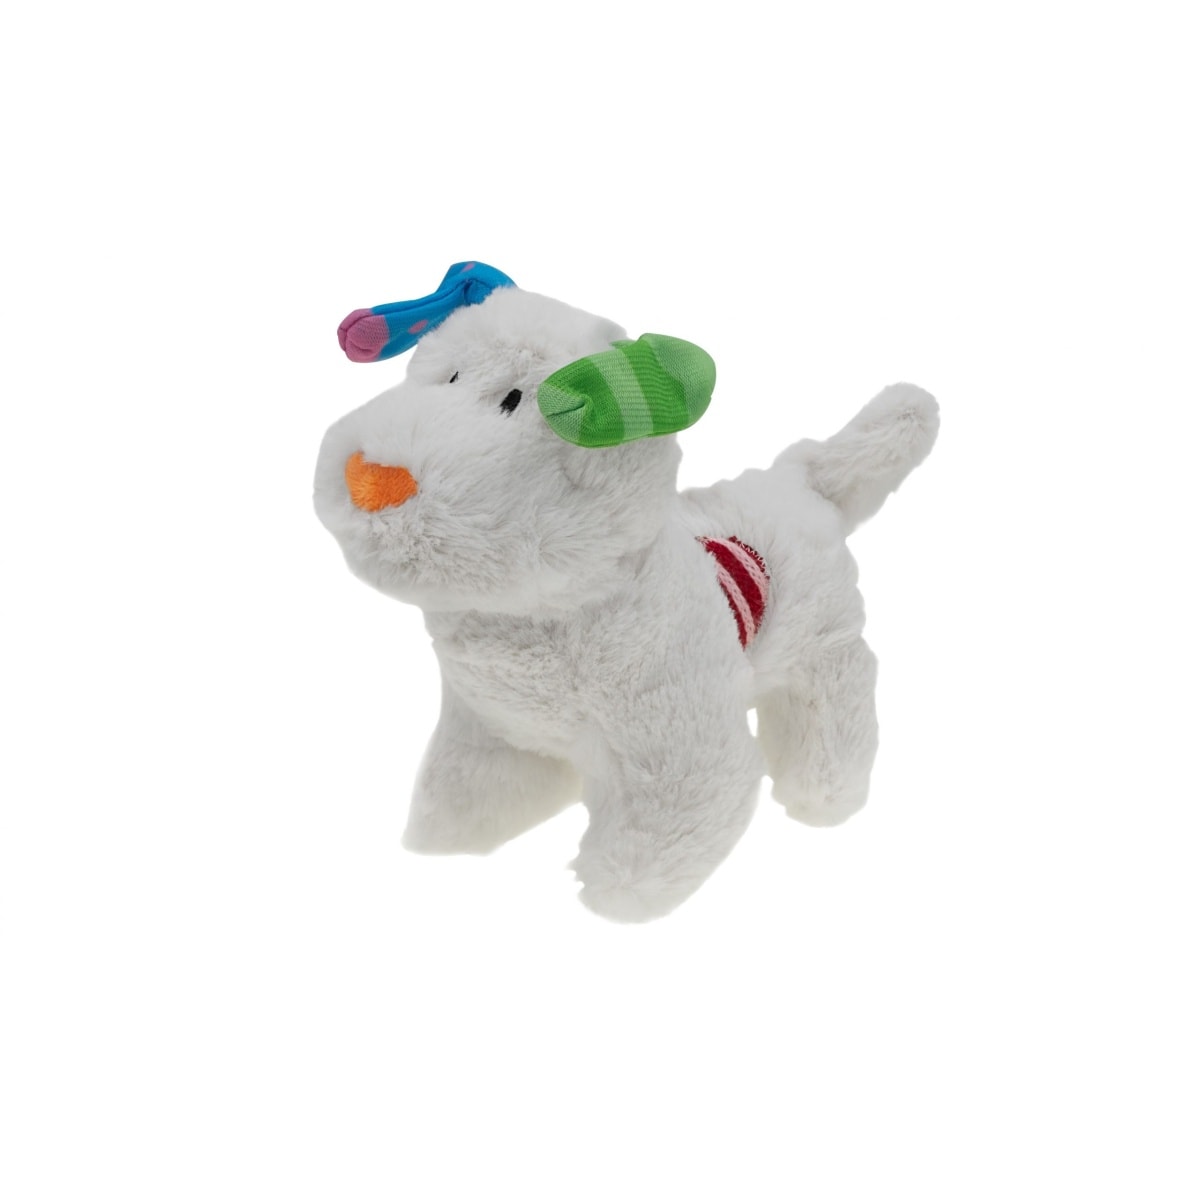 The Snowdog Plush Toy Dog Small Main Image